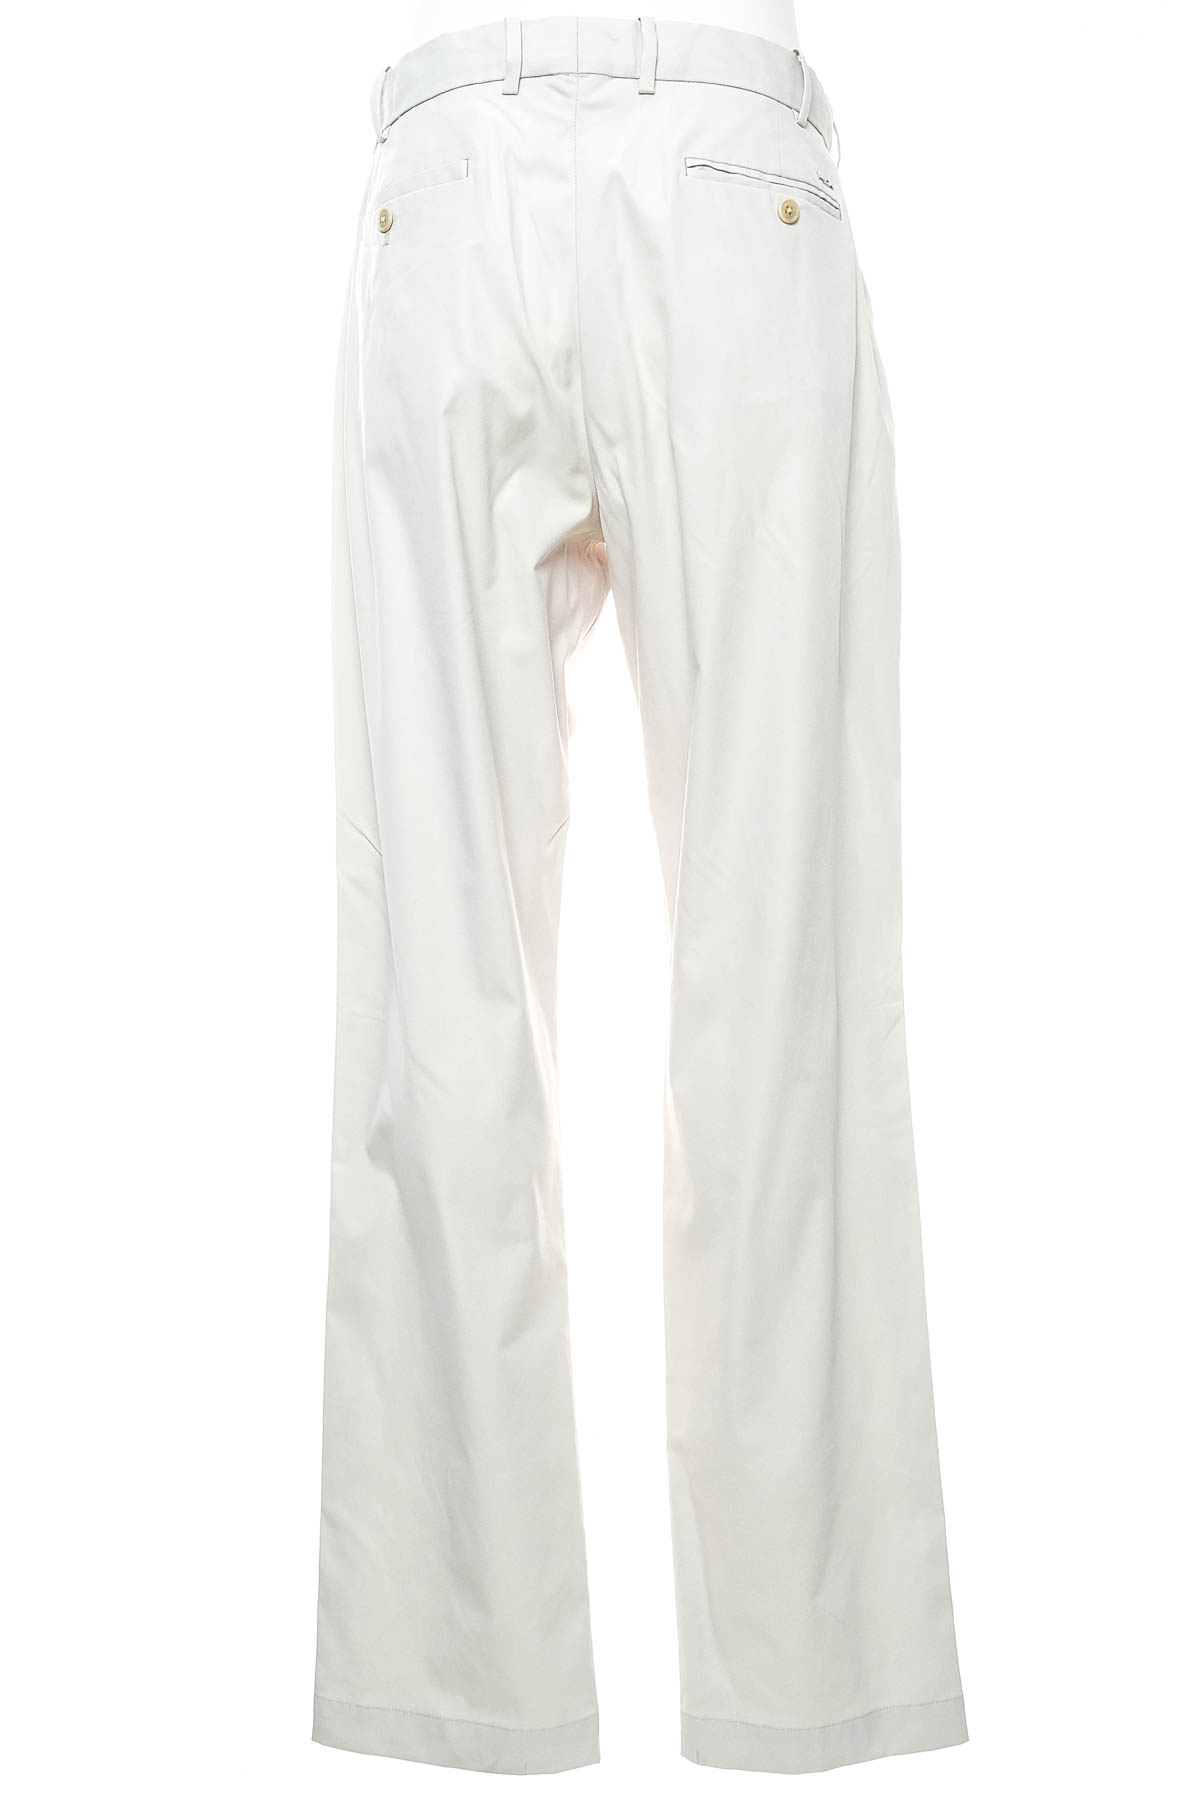 Pantalon pentru bărbați - RLX x Ralph Lauren - 1